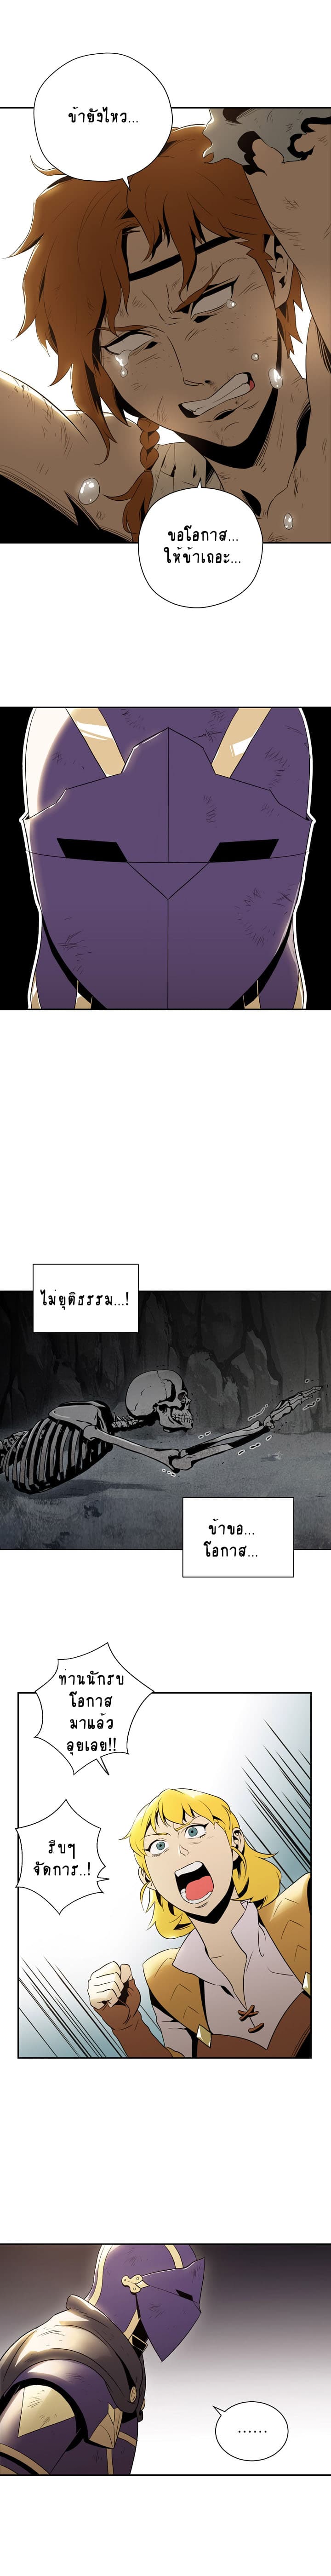 Skeleton Soldier32 (17)